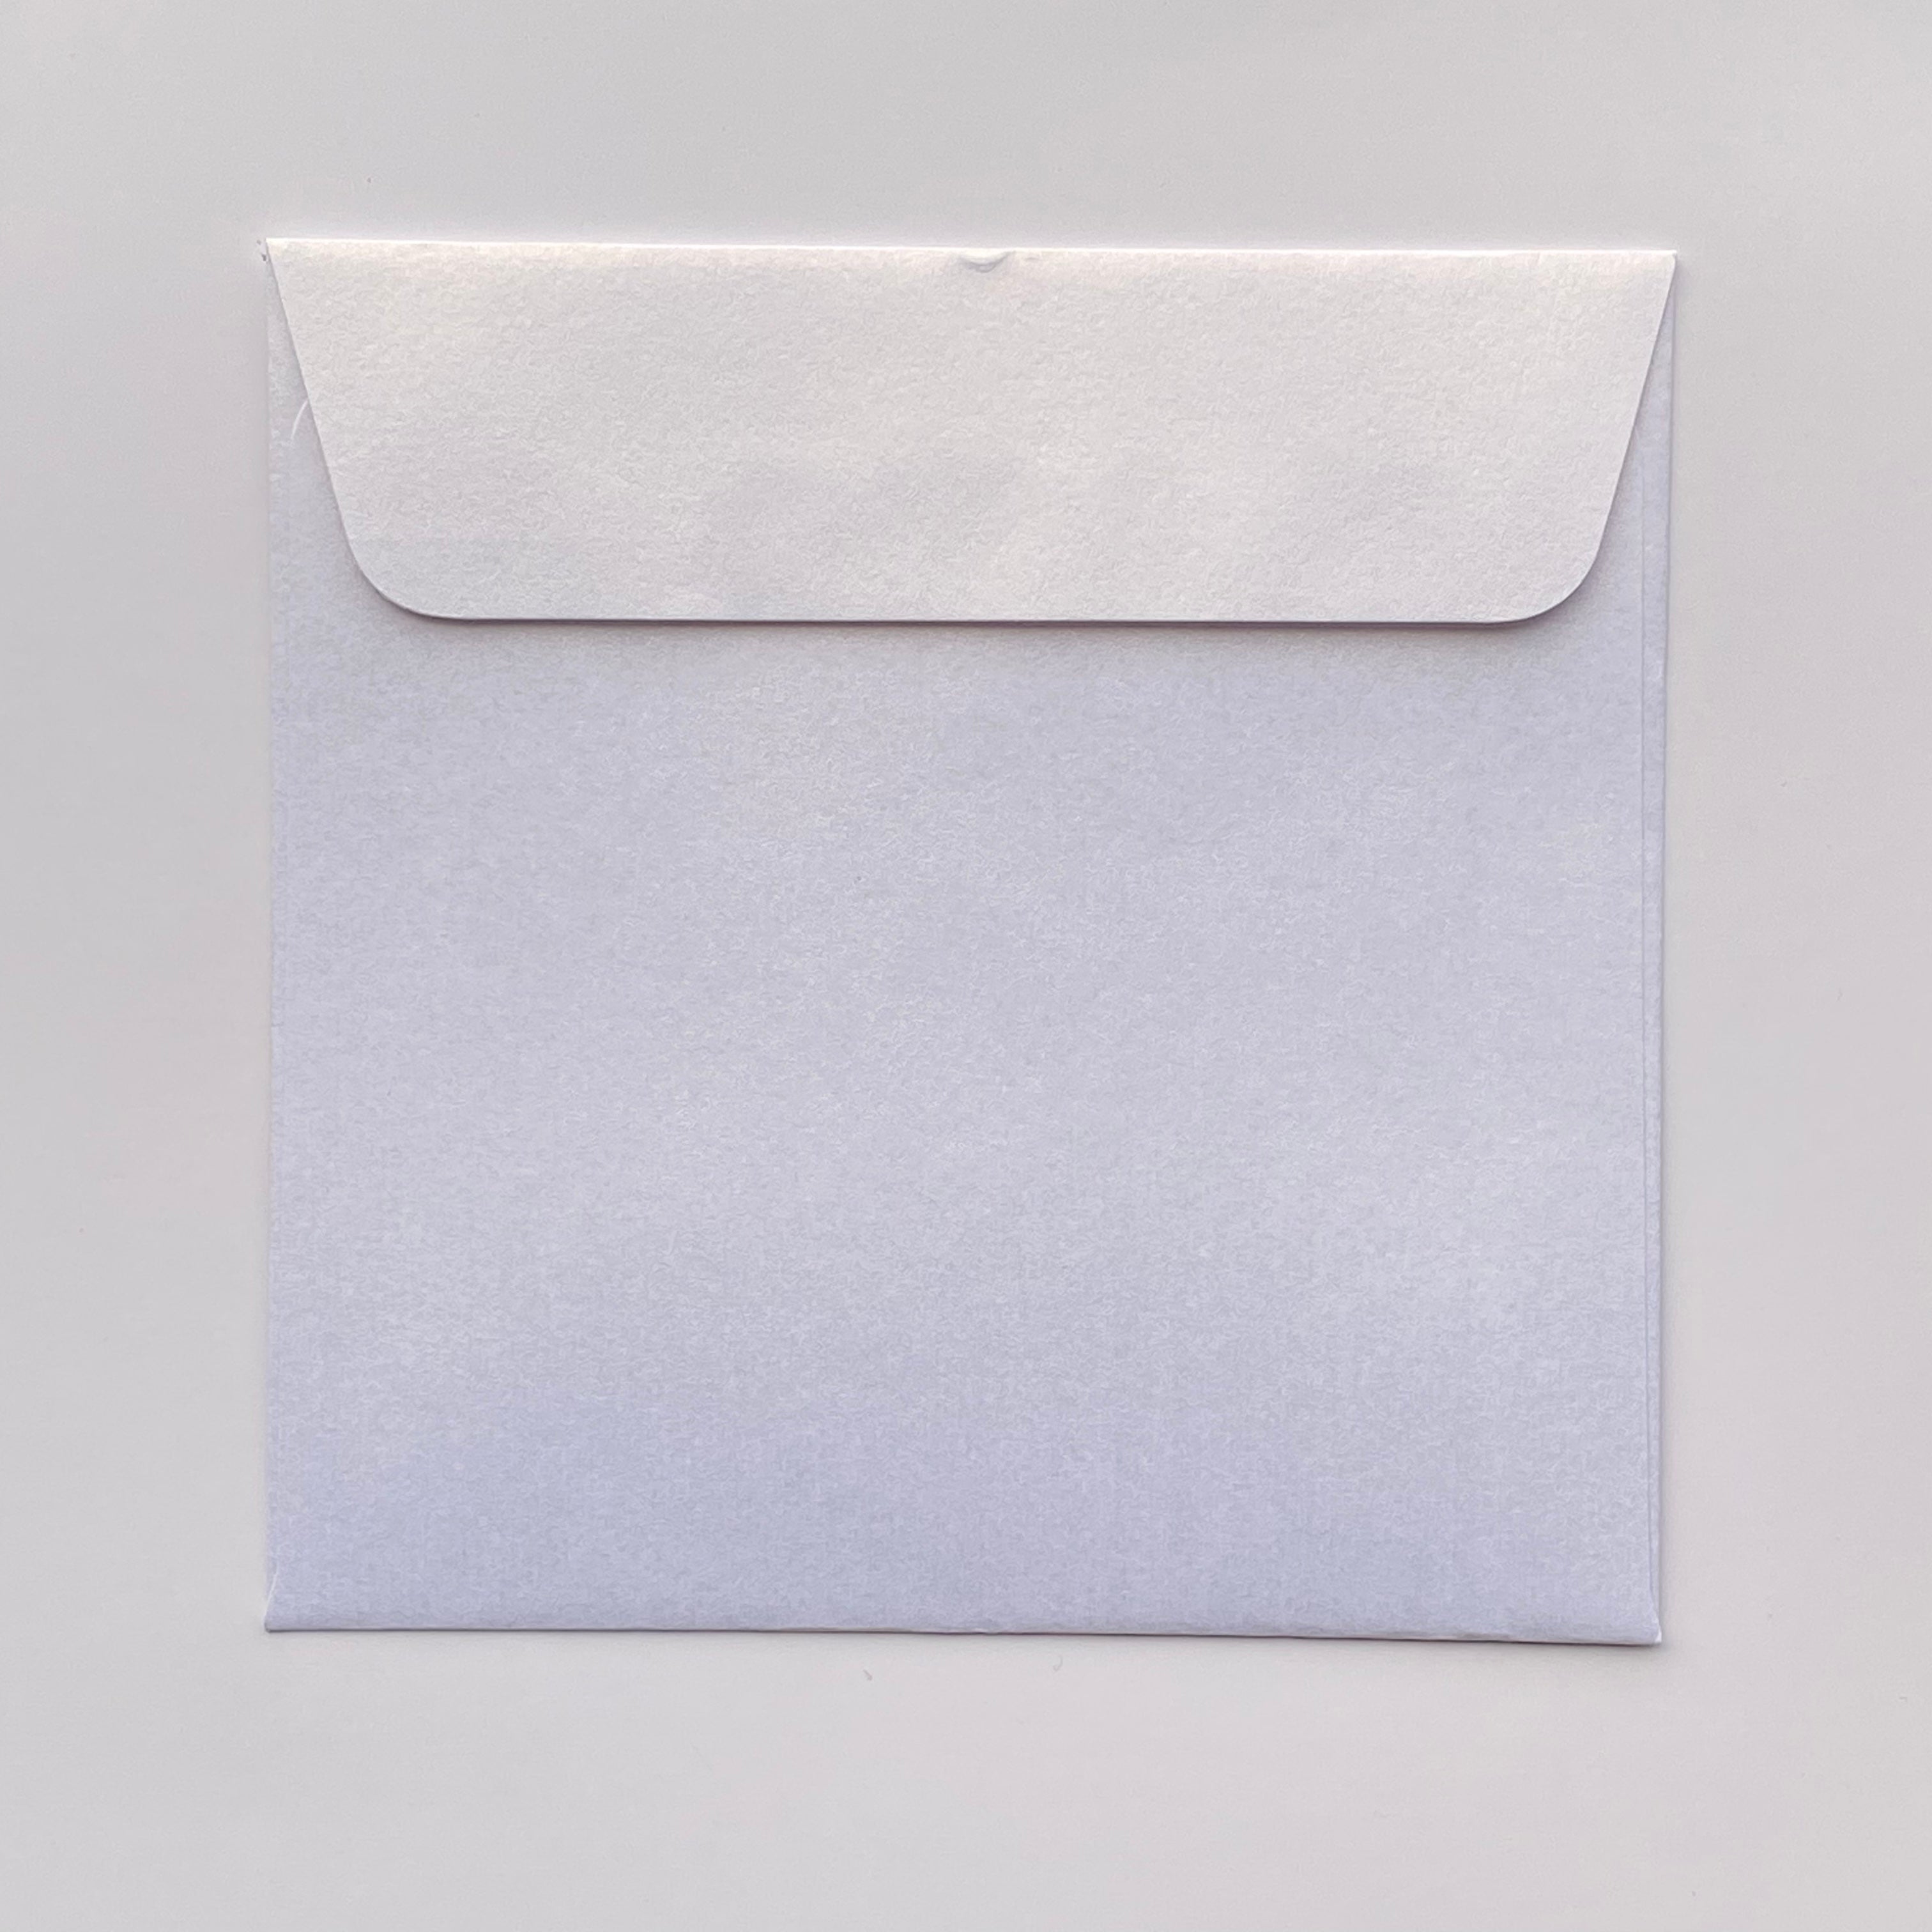 165mm square metallic envelopes